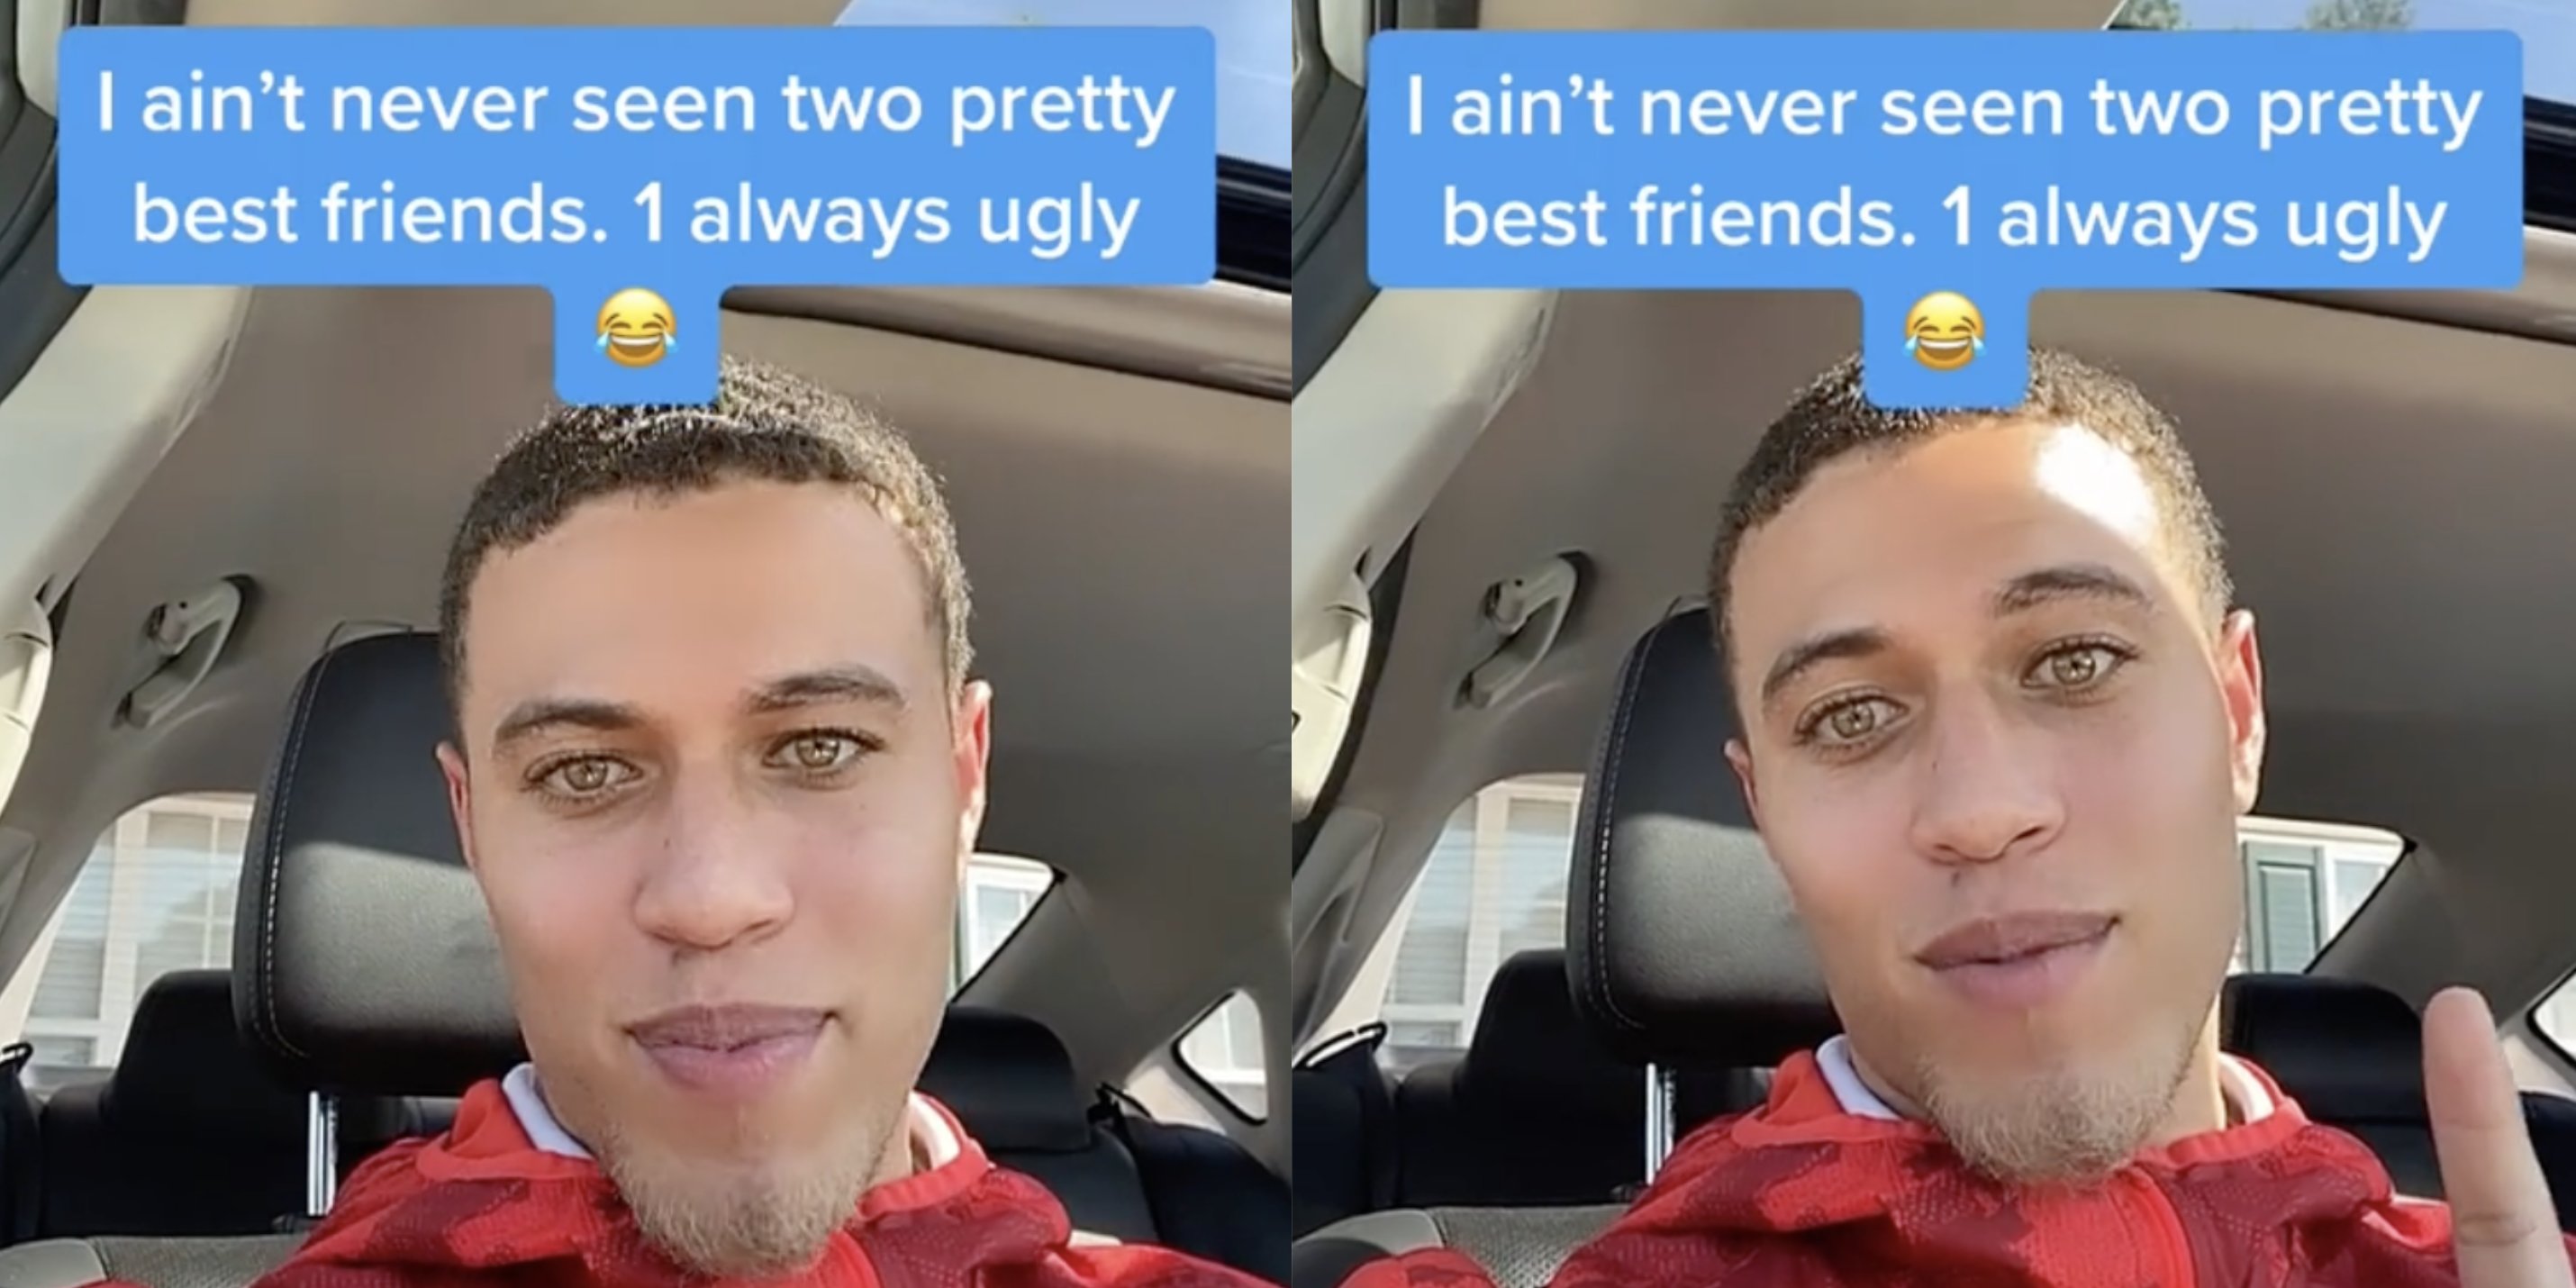 Jordan Scott's "I ain't never seen two pretty best friends" video